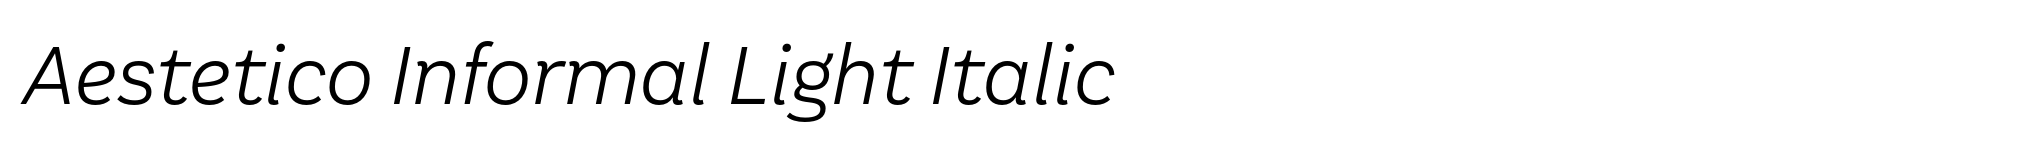 Aestetico Informal Light Italic image